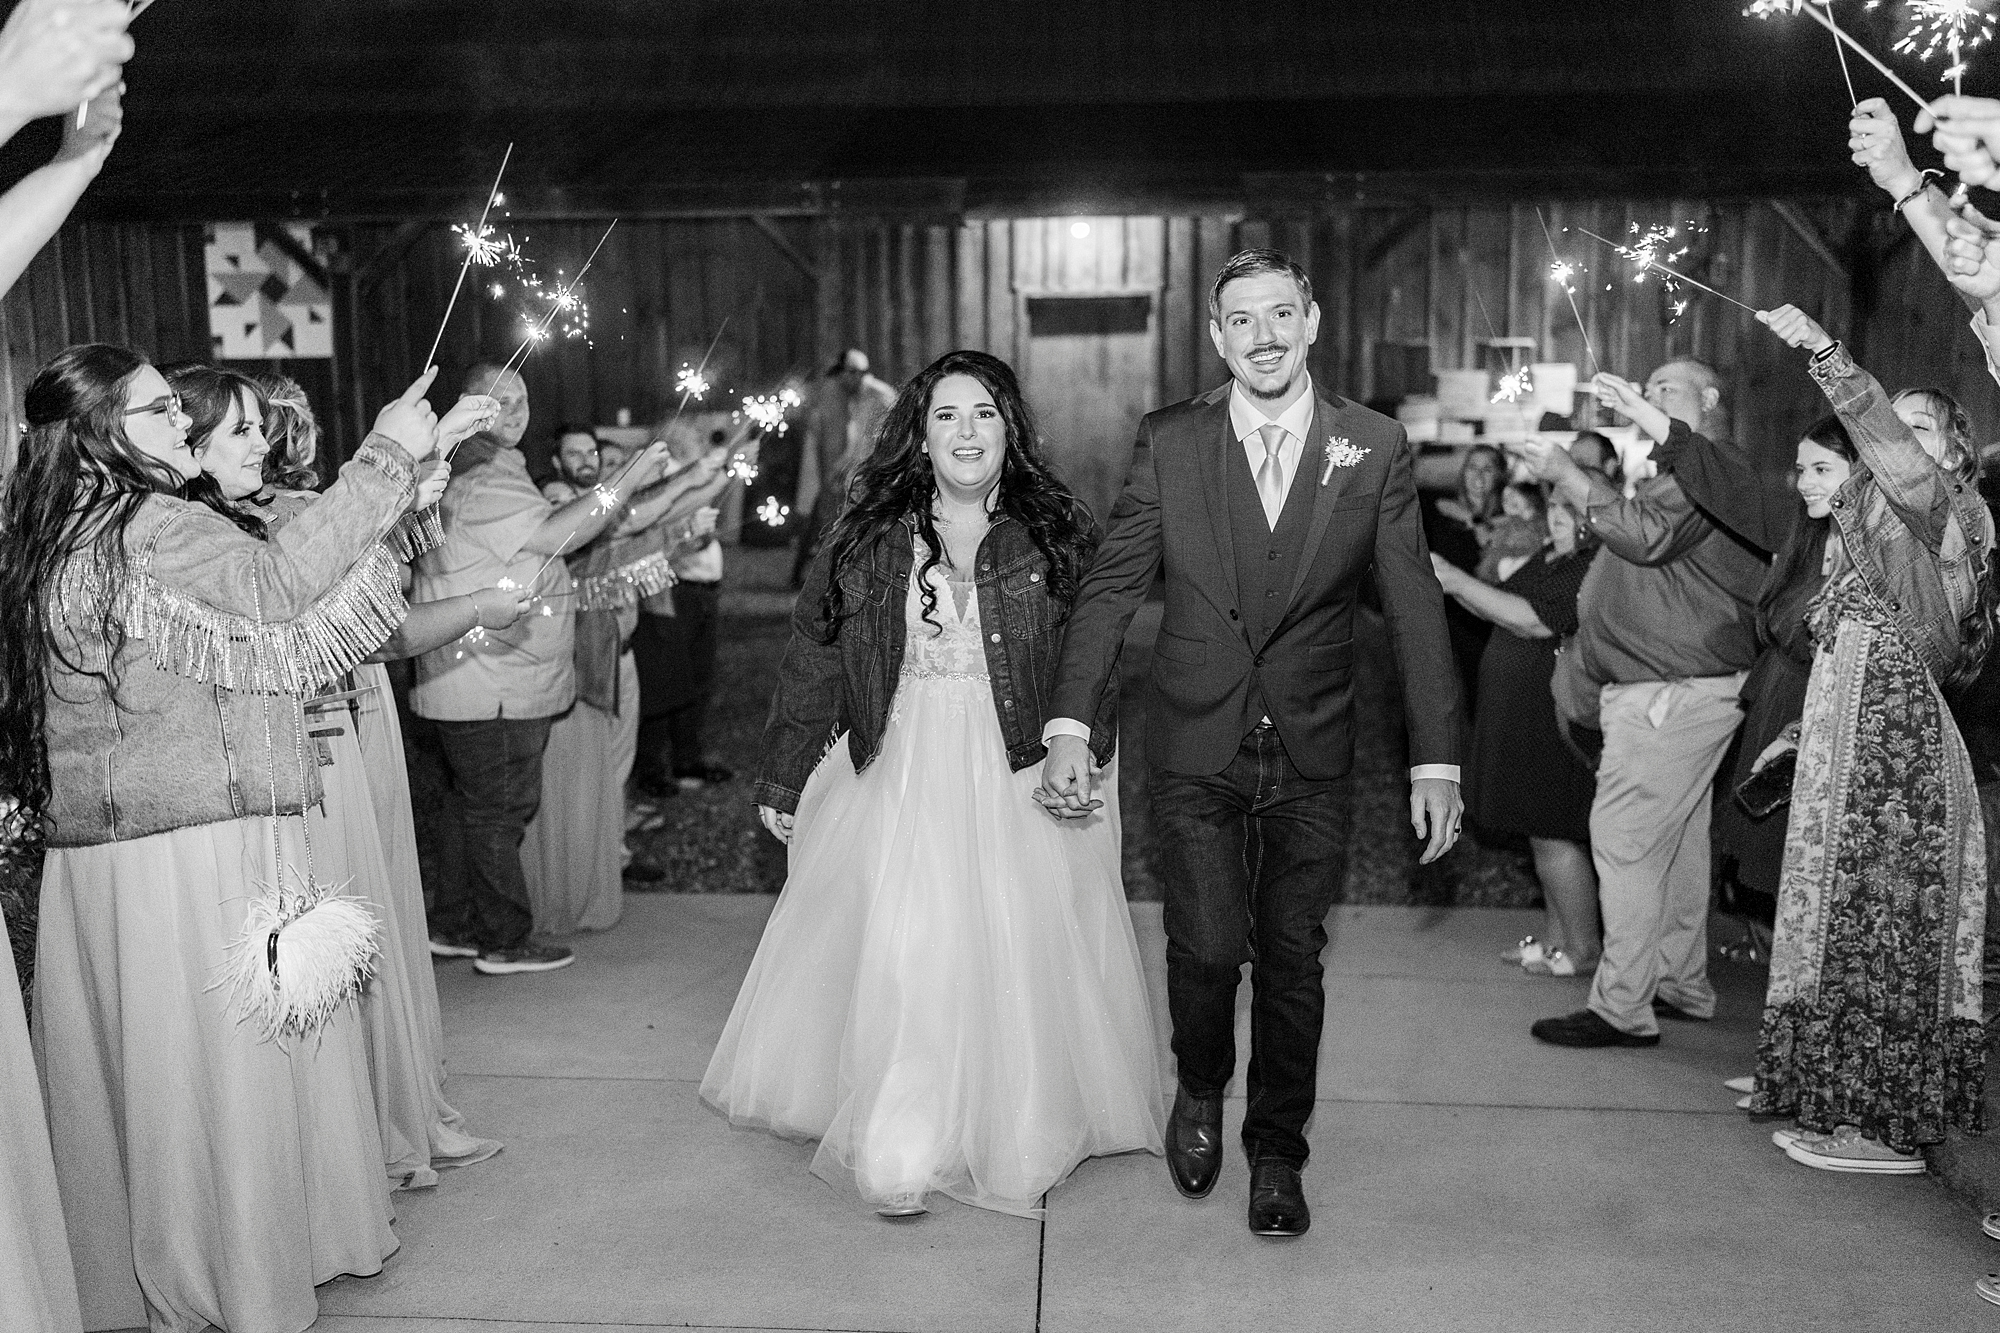 newlyweds leave wedding reception through sparkler exit